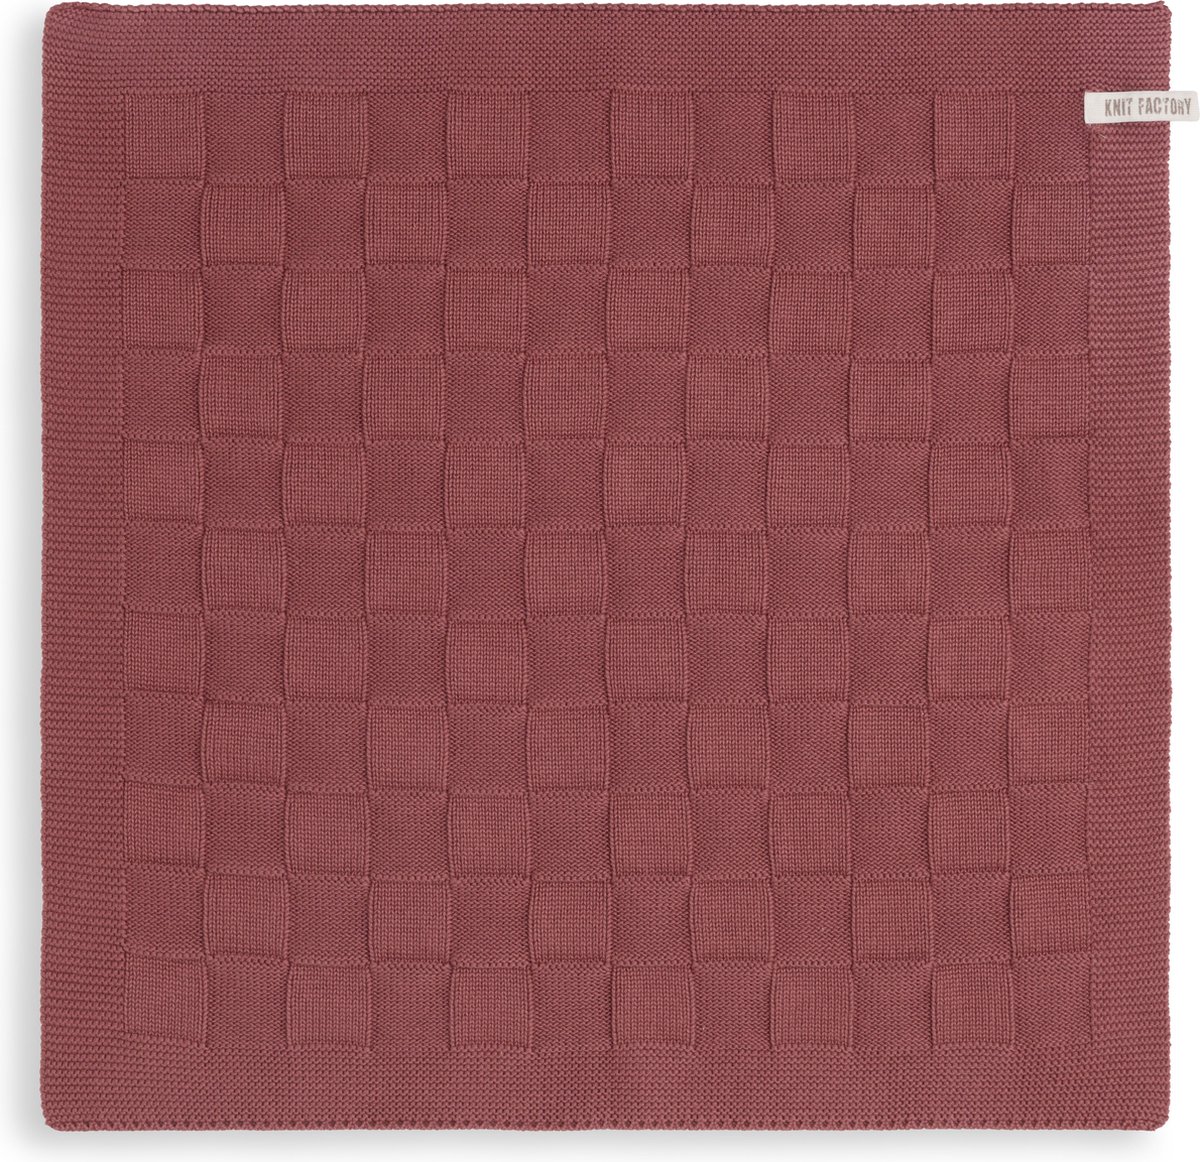 Knit Factory Gebreide Keukendoek - Keukenhanddoek Uni - Handdoek - Vaatdoek - Keuken doek - Stone Red - Rood - 50x50 cm